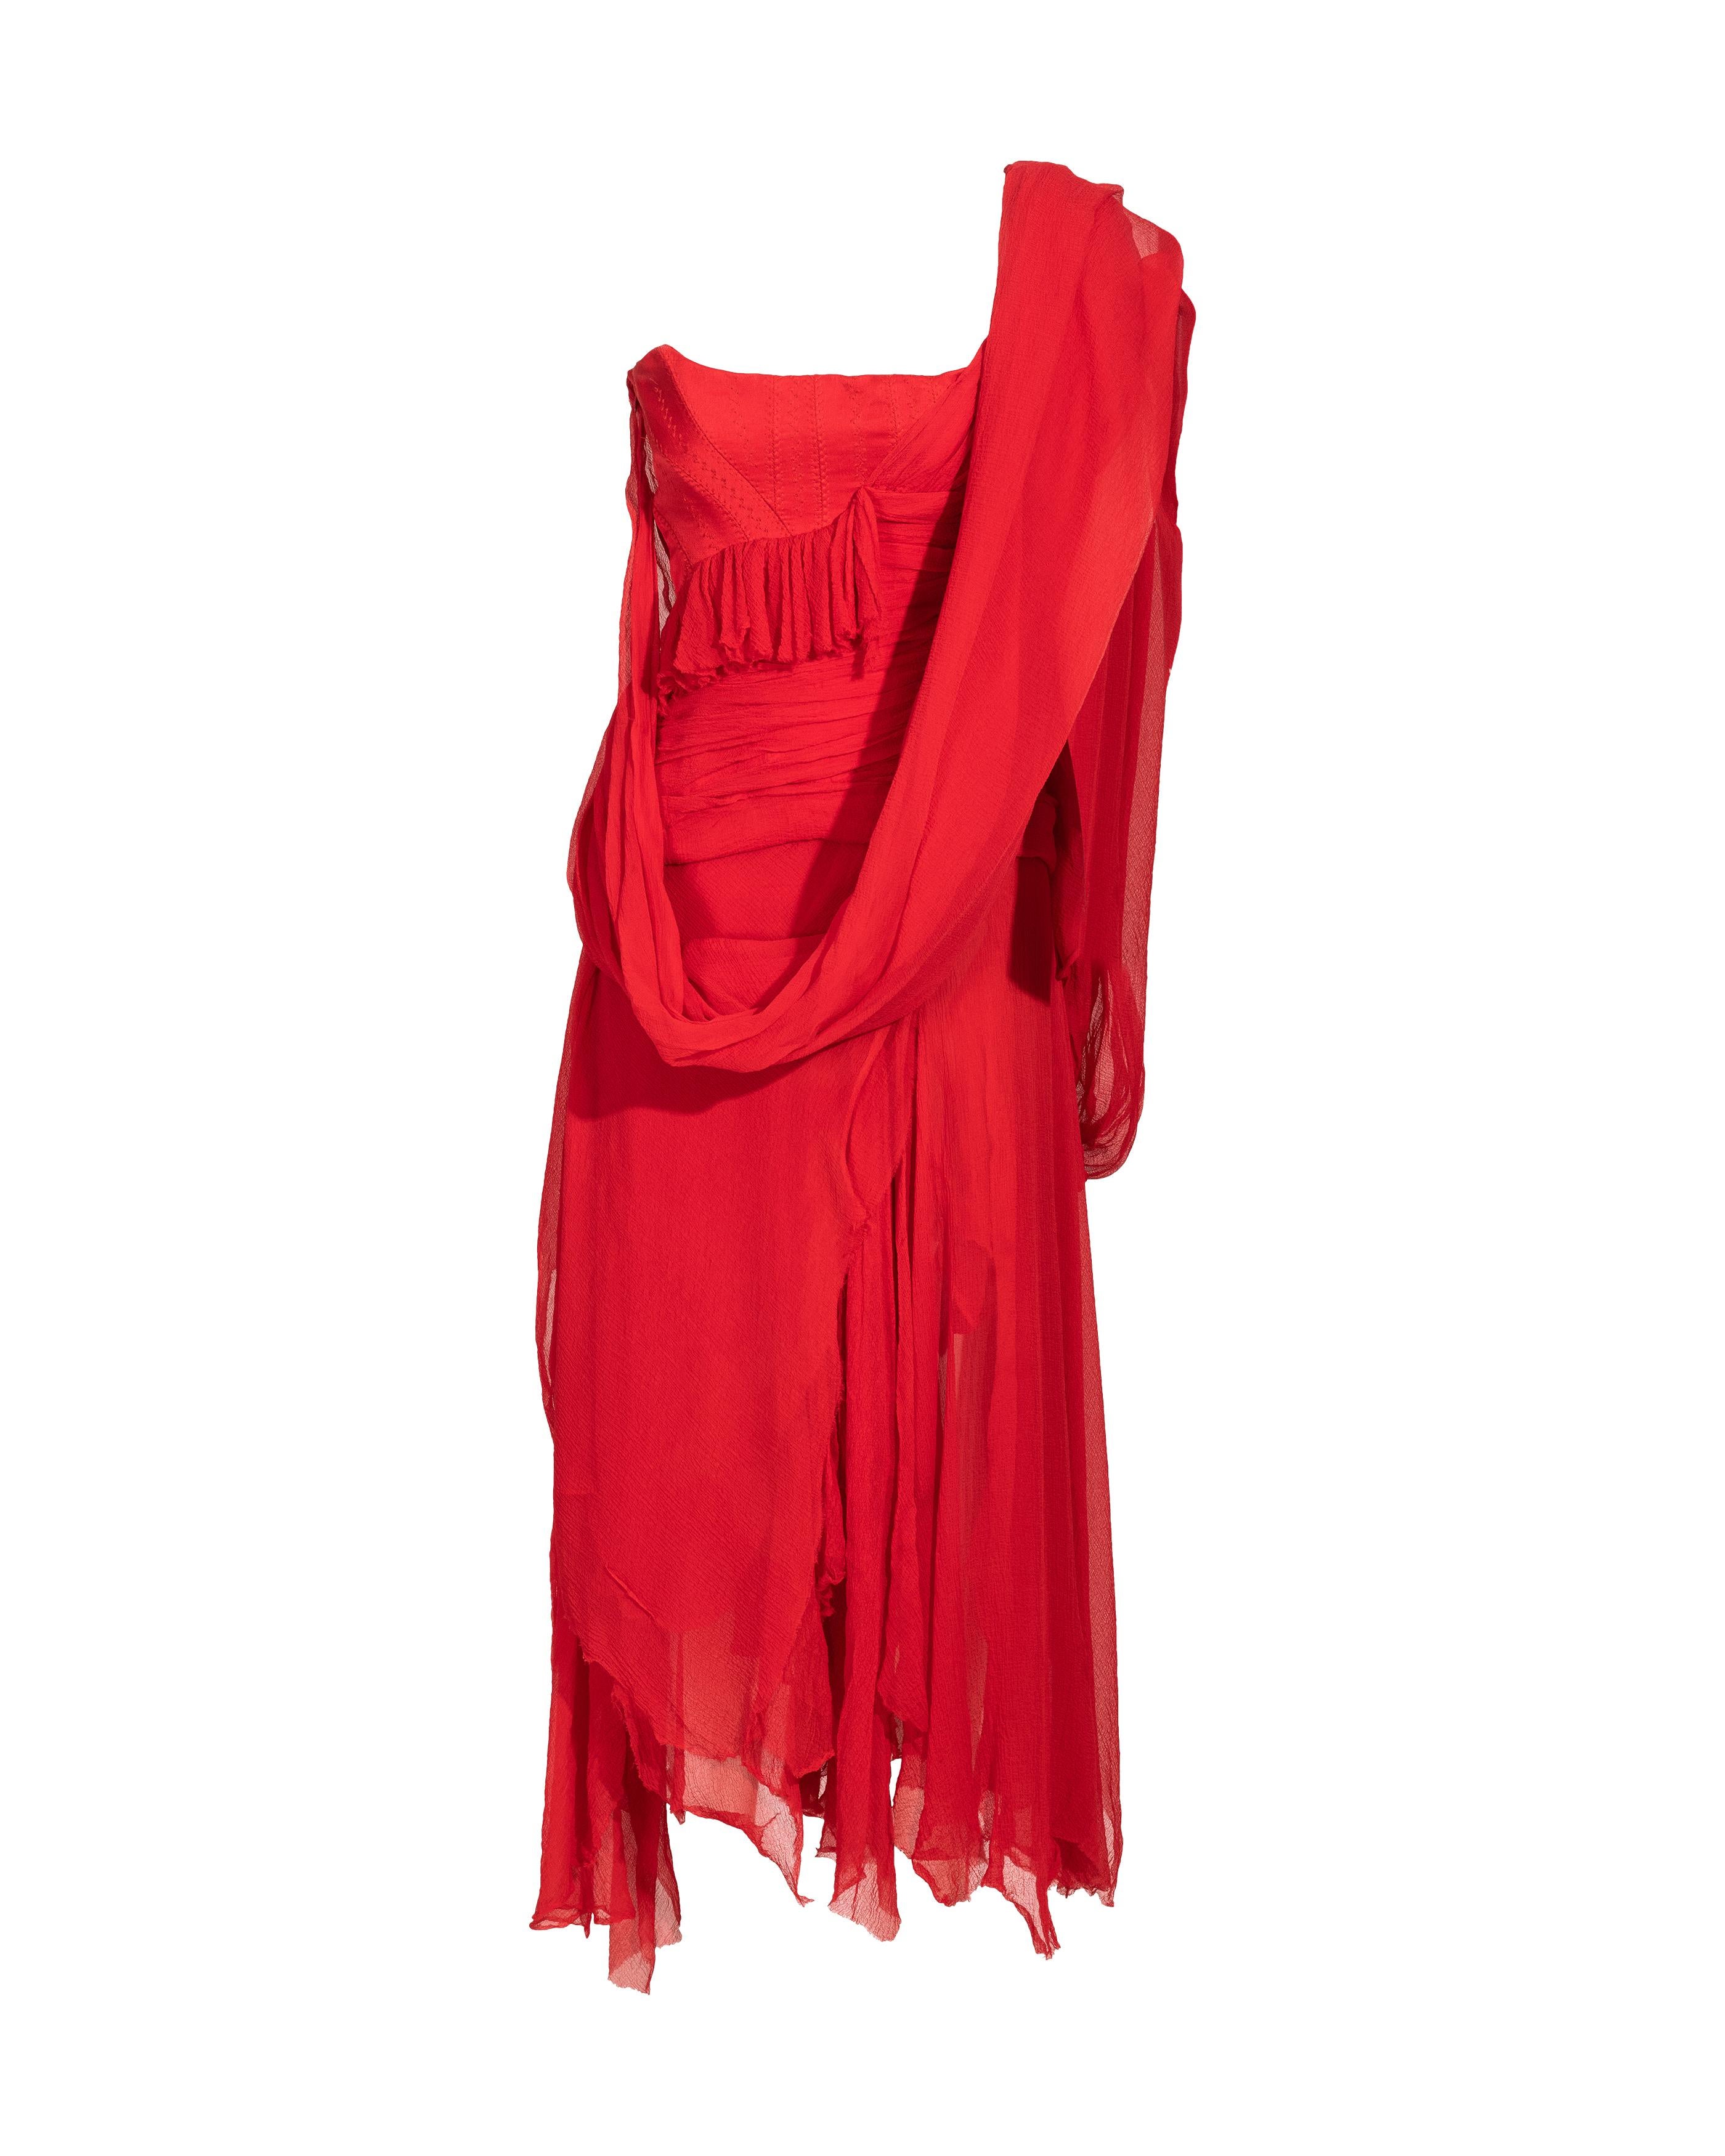 S/S 2003 Alexander McQueen  The Collective Robe en mousseline de soie rouge avec ceinture 12